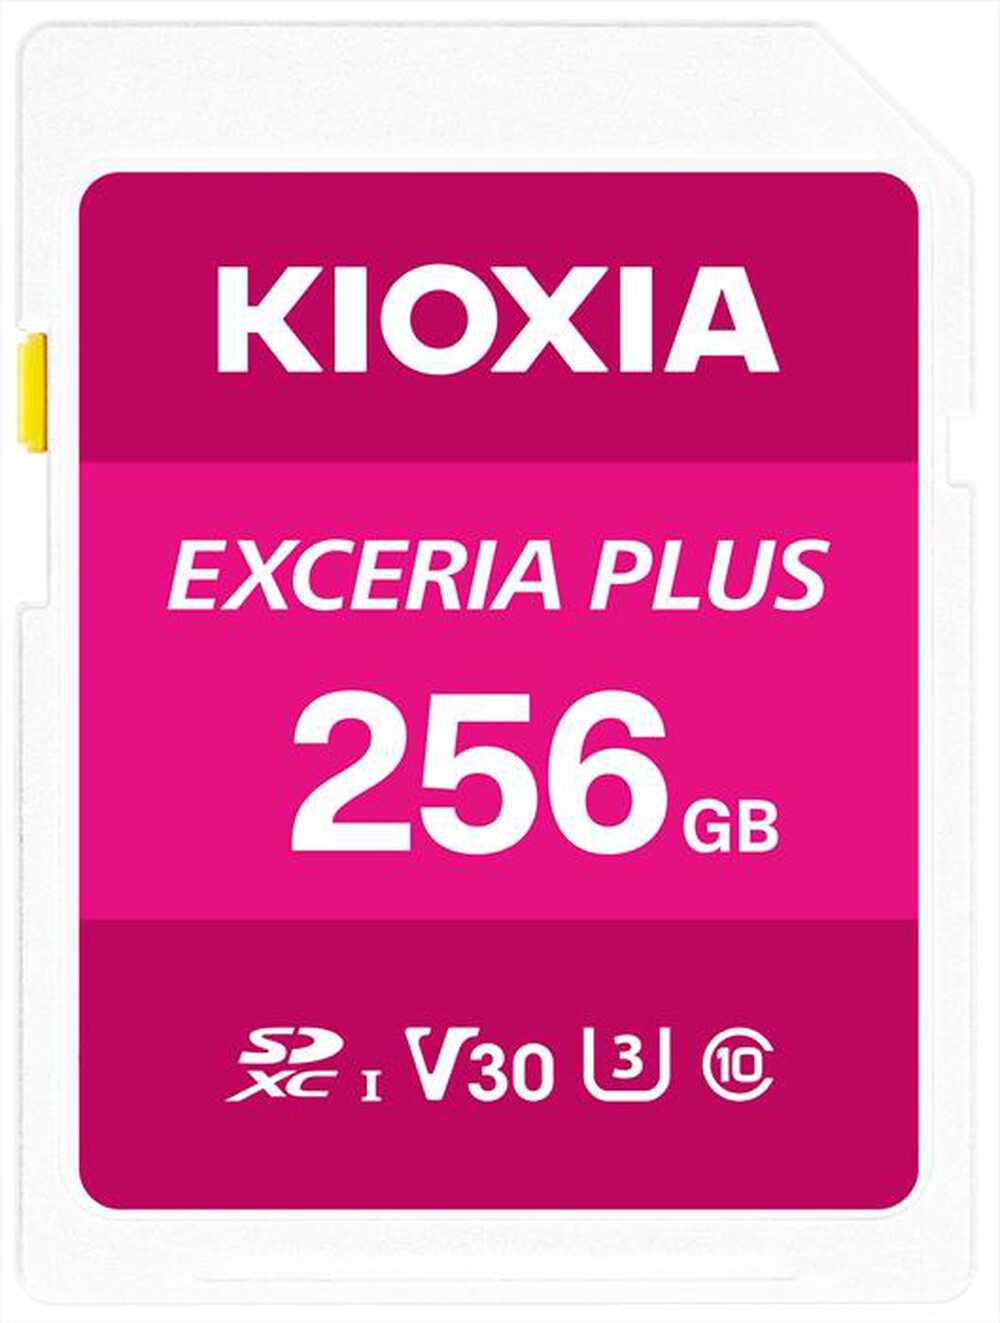 "KIOXIA - SD EXCERIA PLUS NPL1 UHS-1 256GB-Rosa"